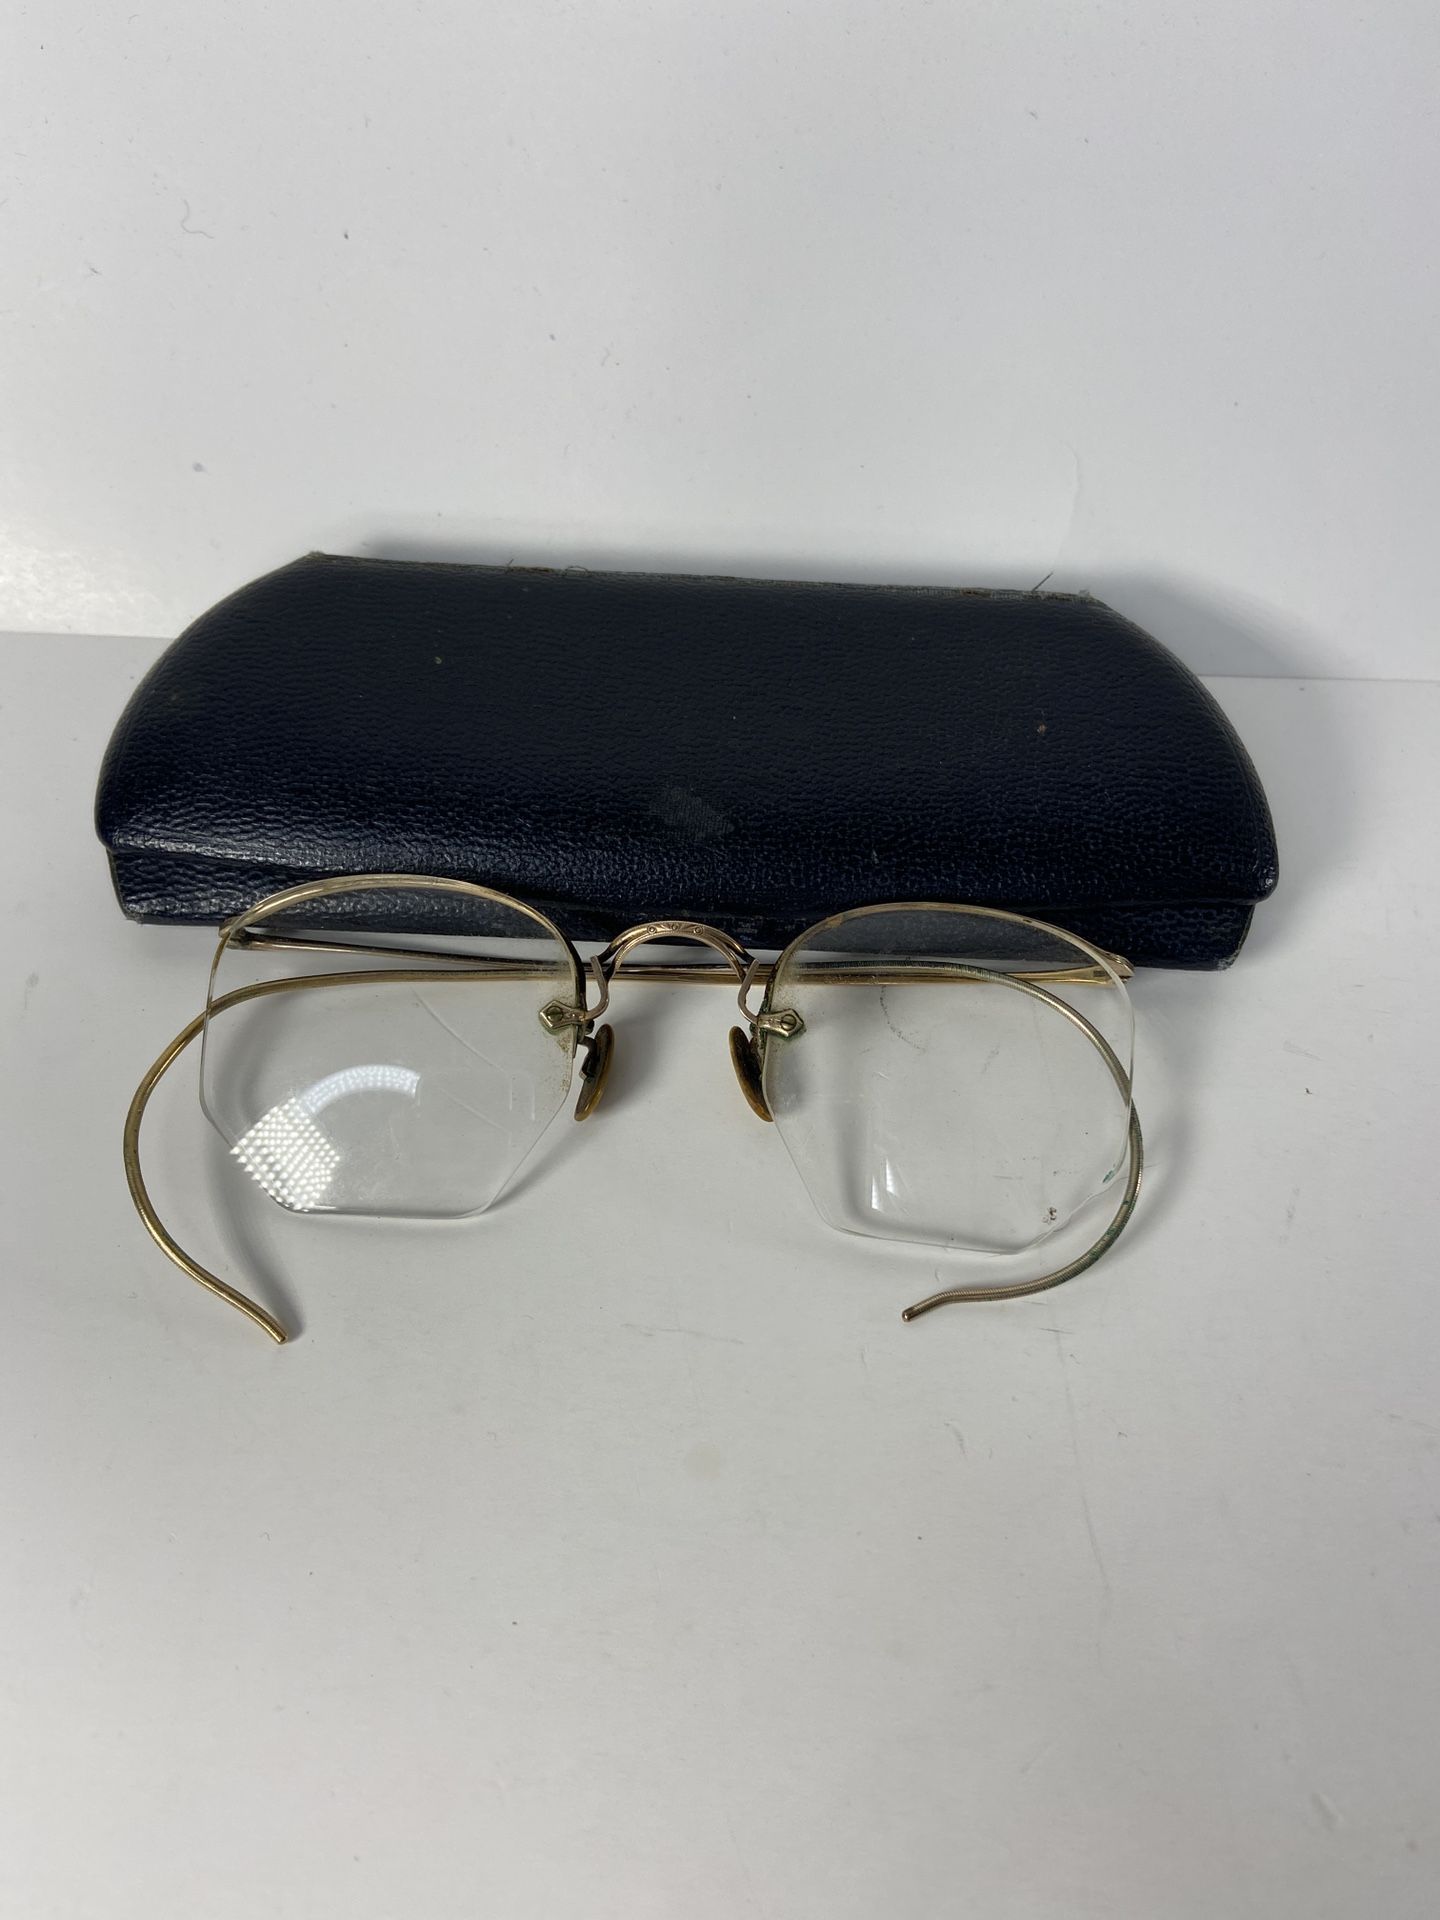 Antique 12 k gold filled glasses with case